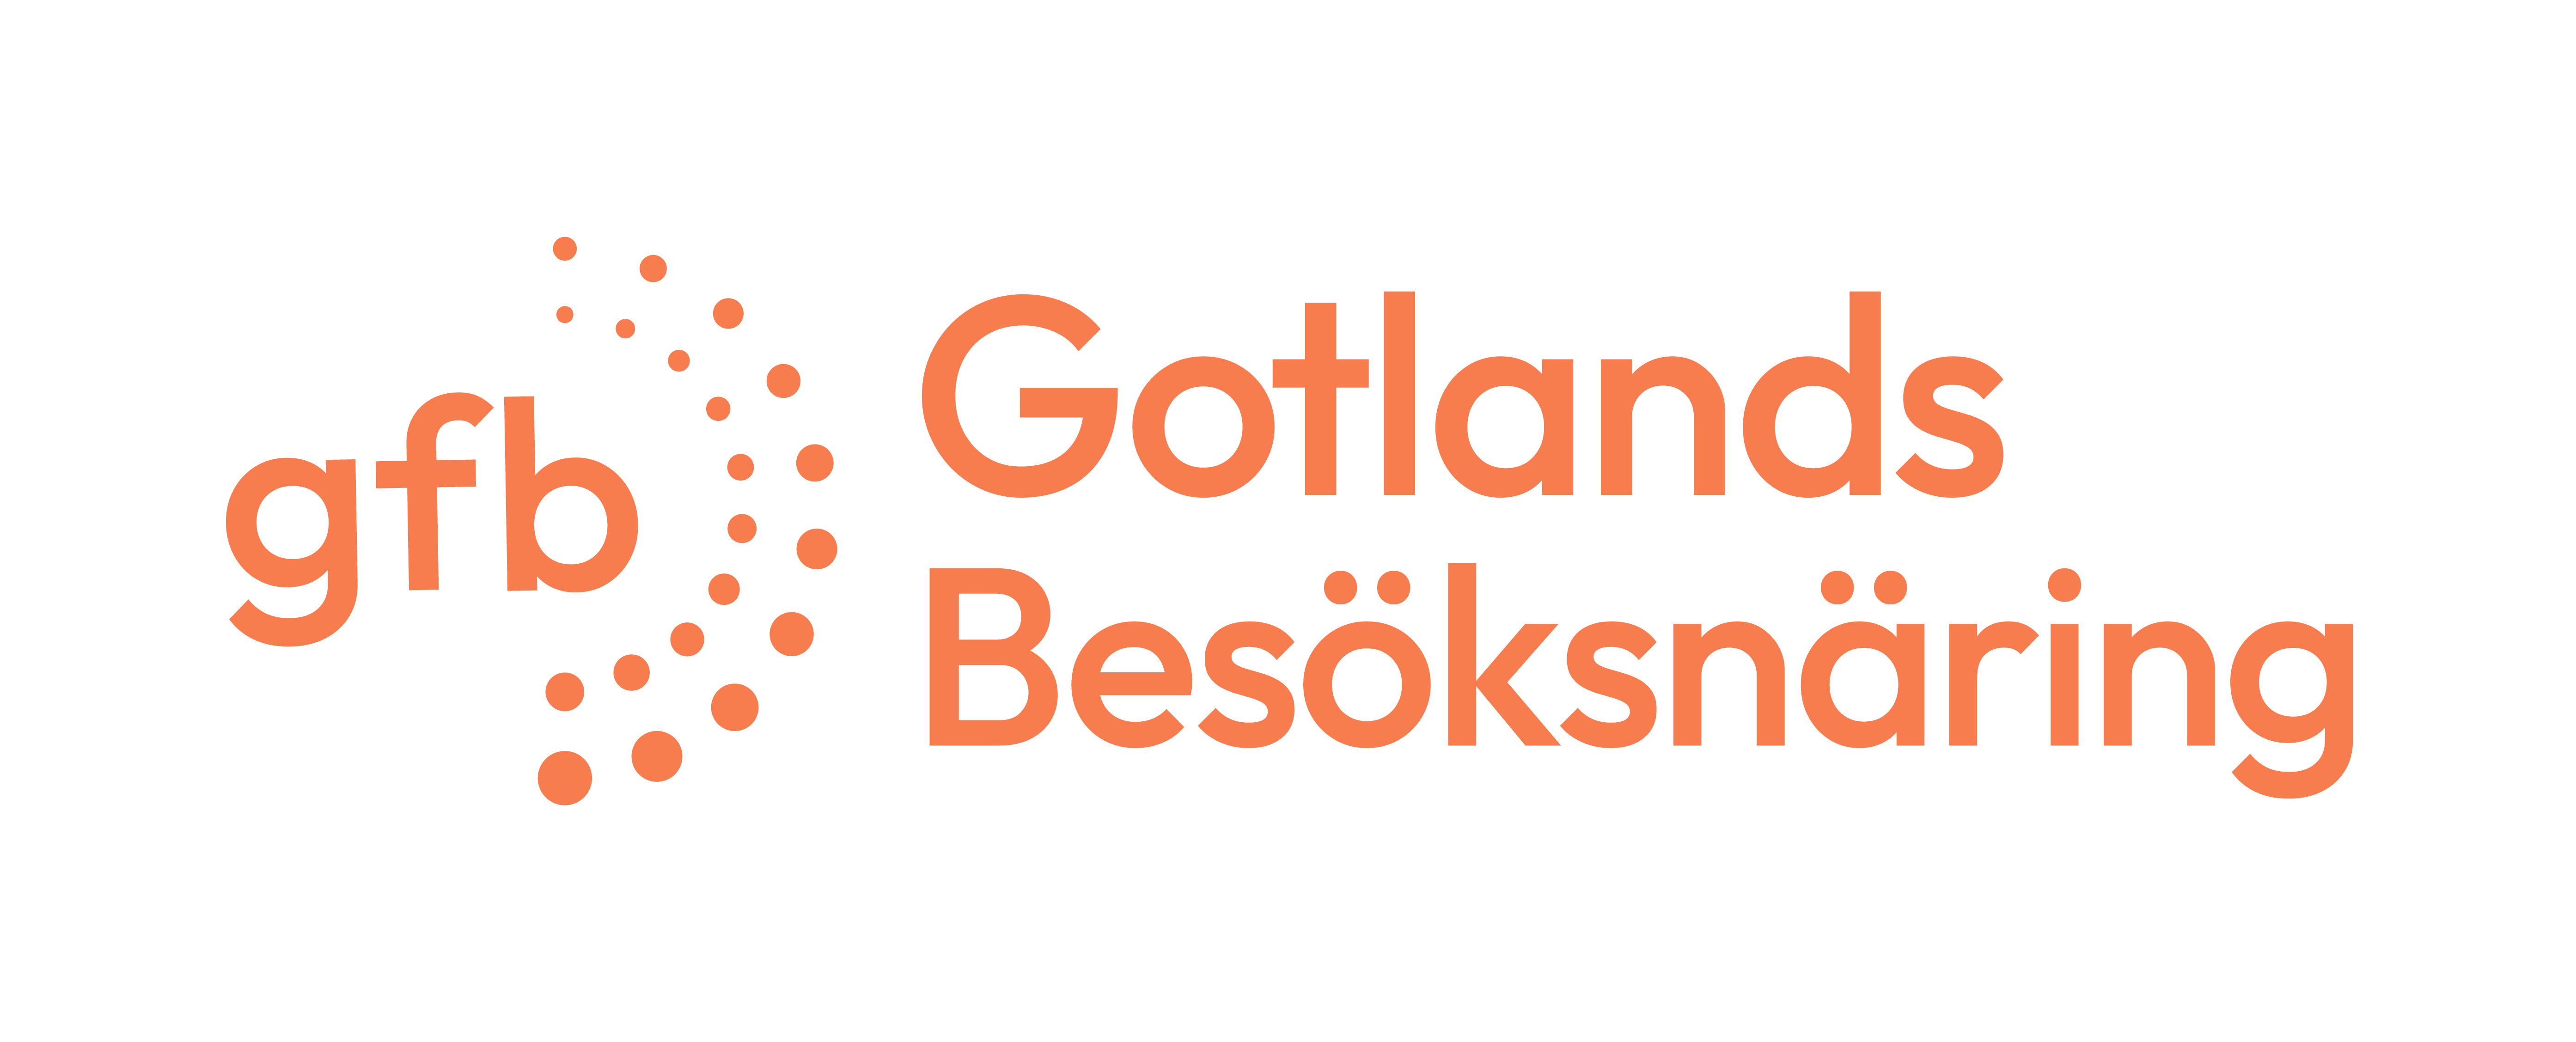 Gotland logo